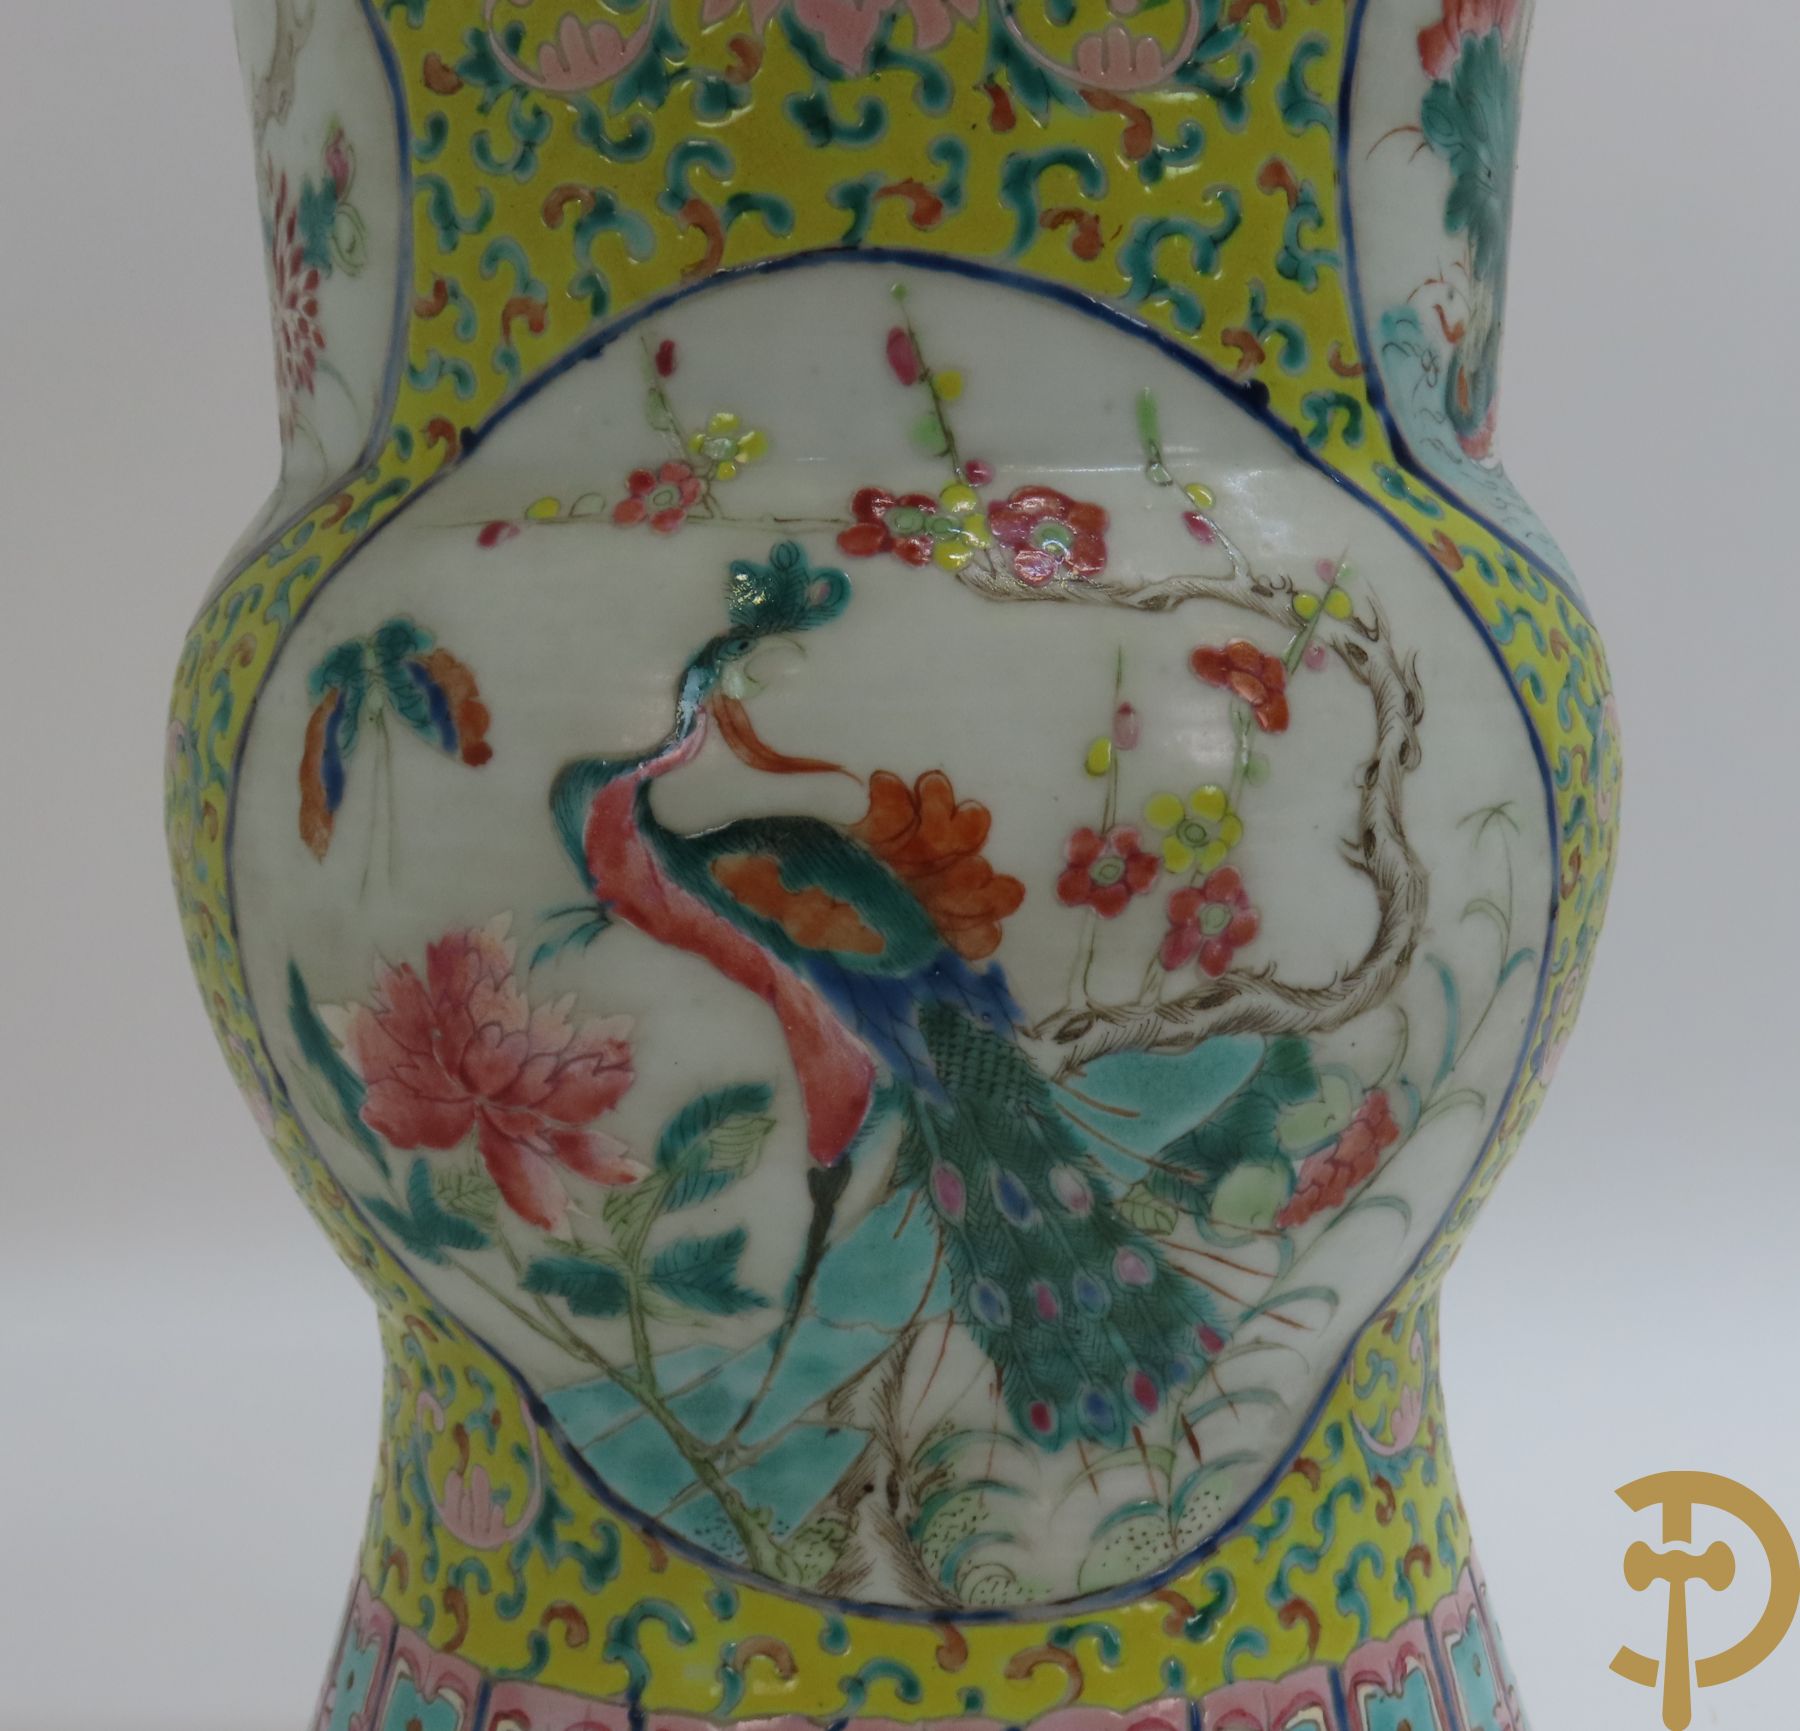 Chinese porseleinen vaas met fenix- en bloemendecor op gele fond